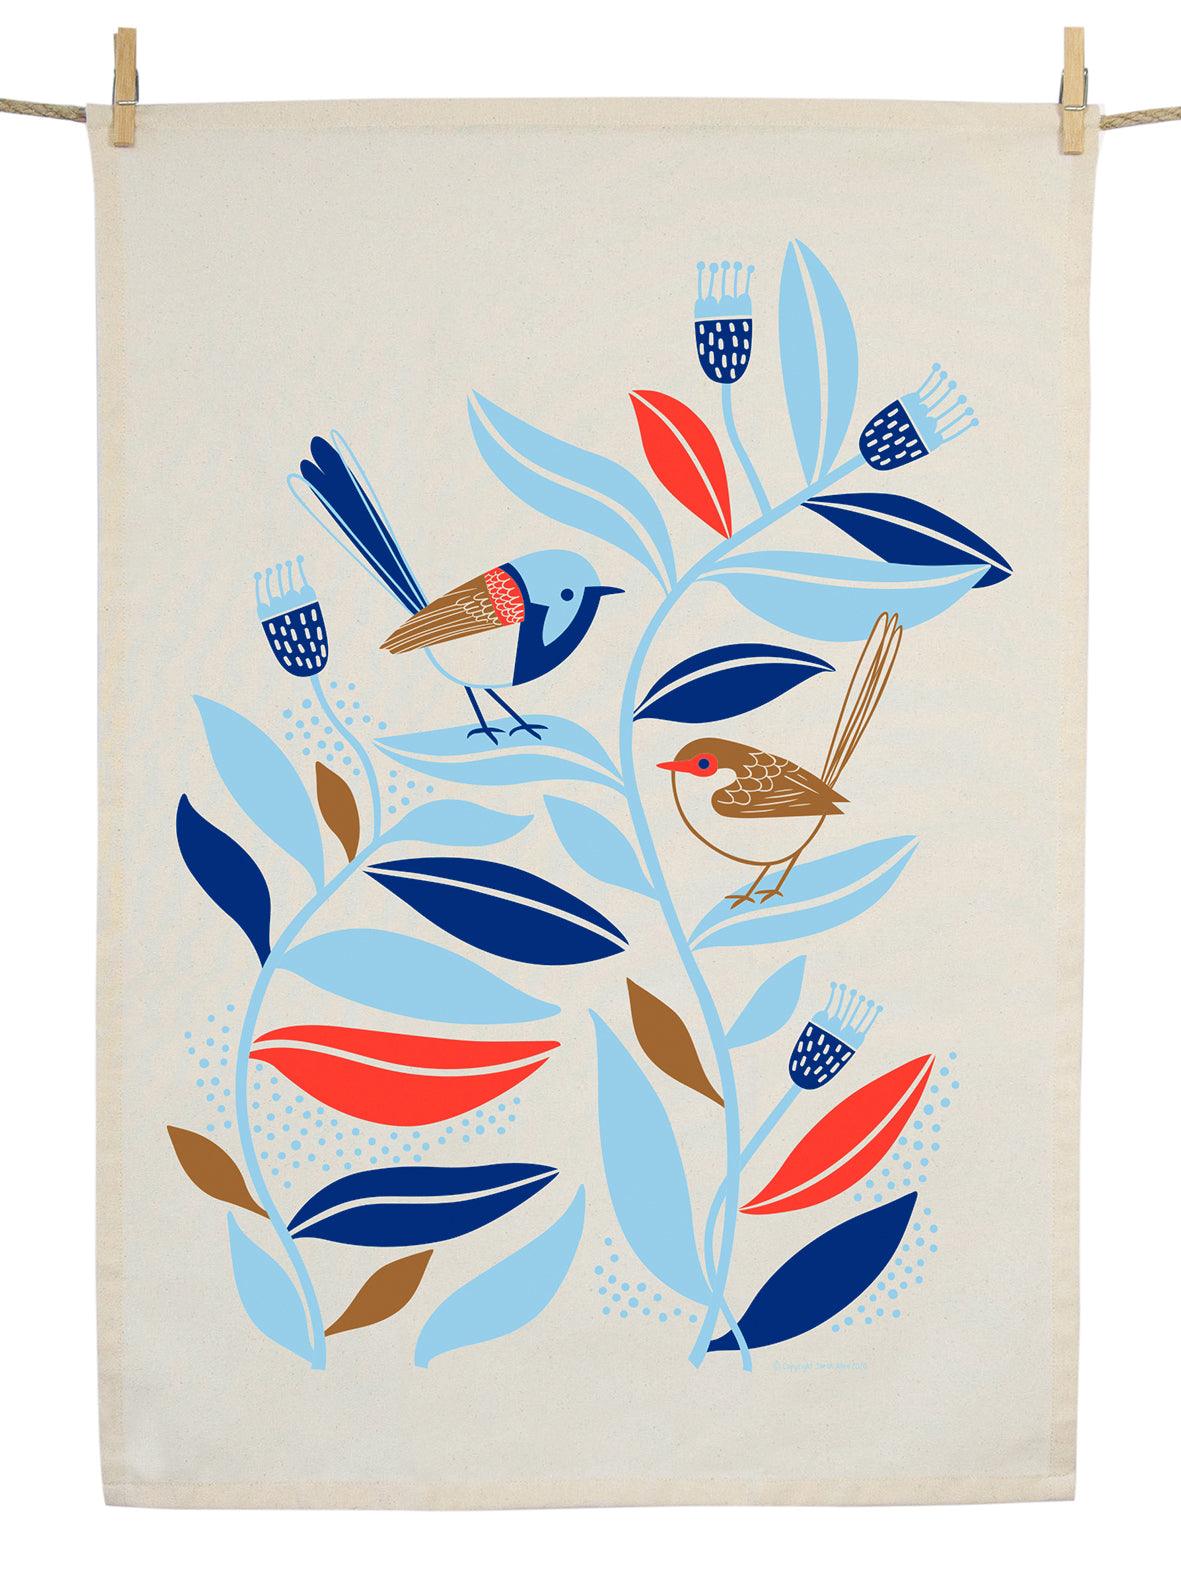 Tea Towel - Peaceful Wrens - Handworks Nouveau Paperie